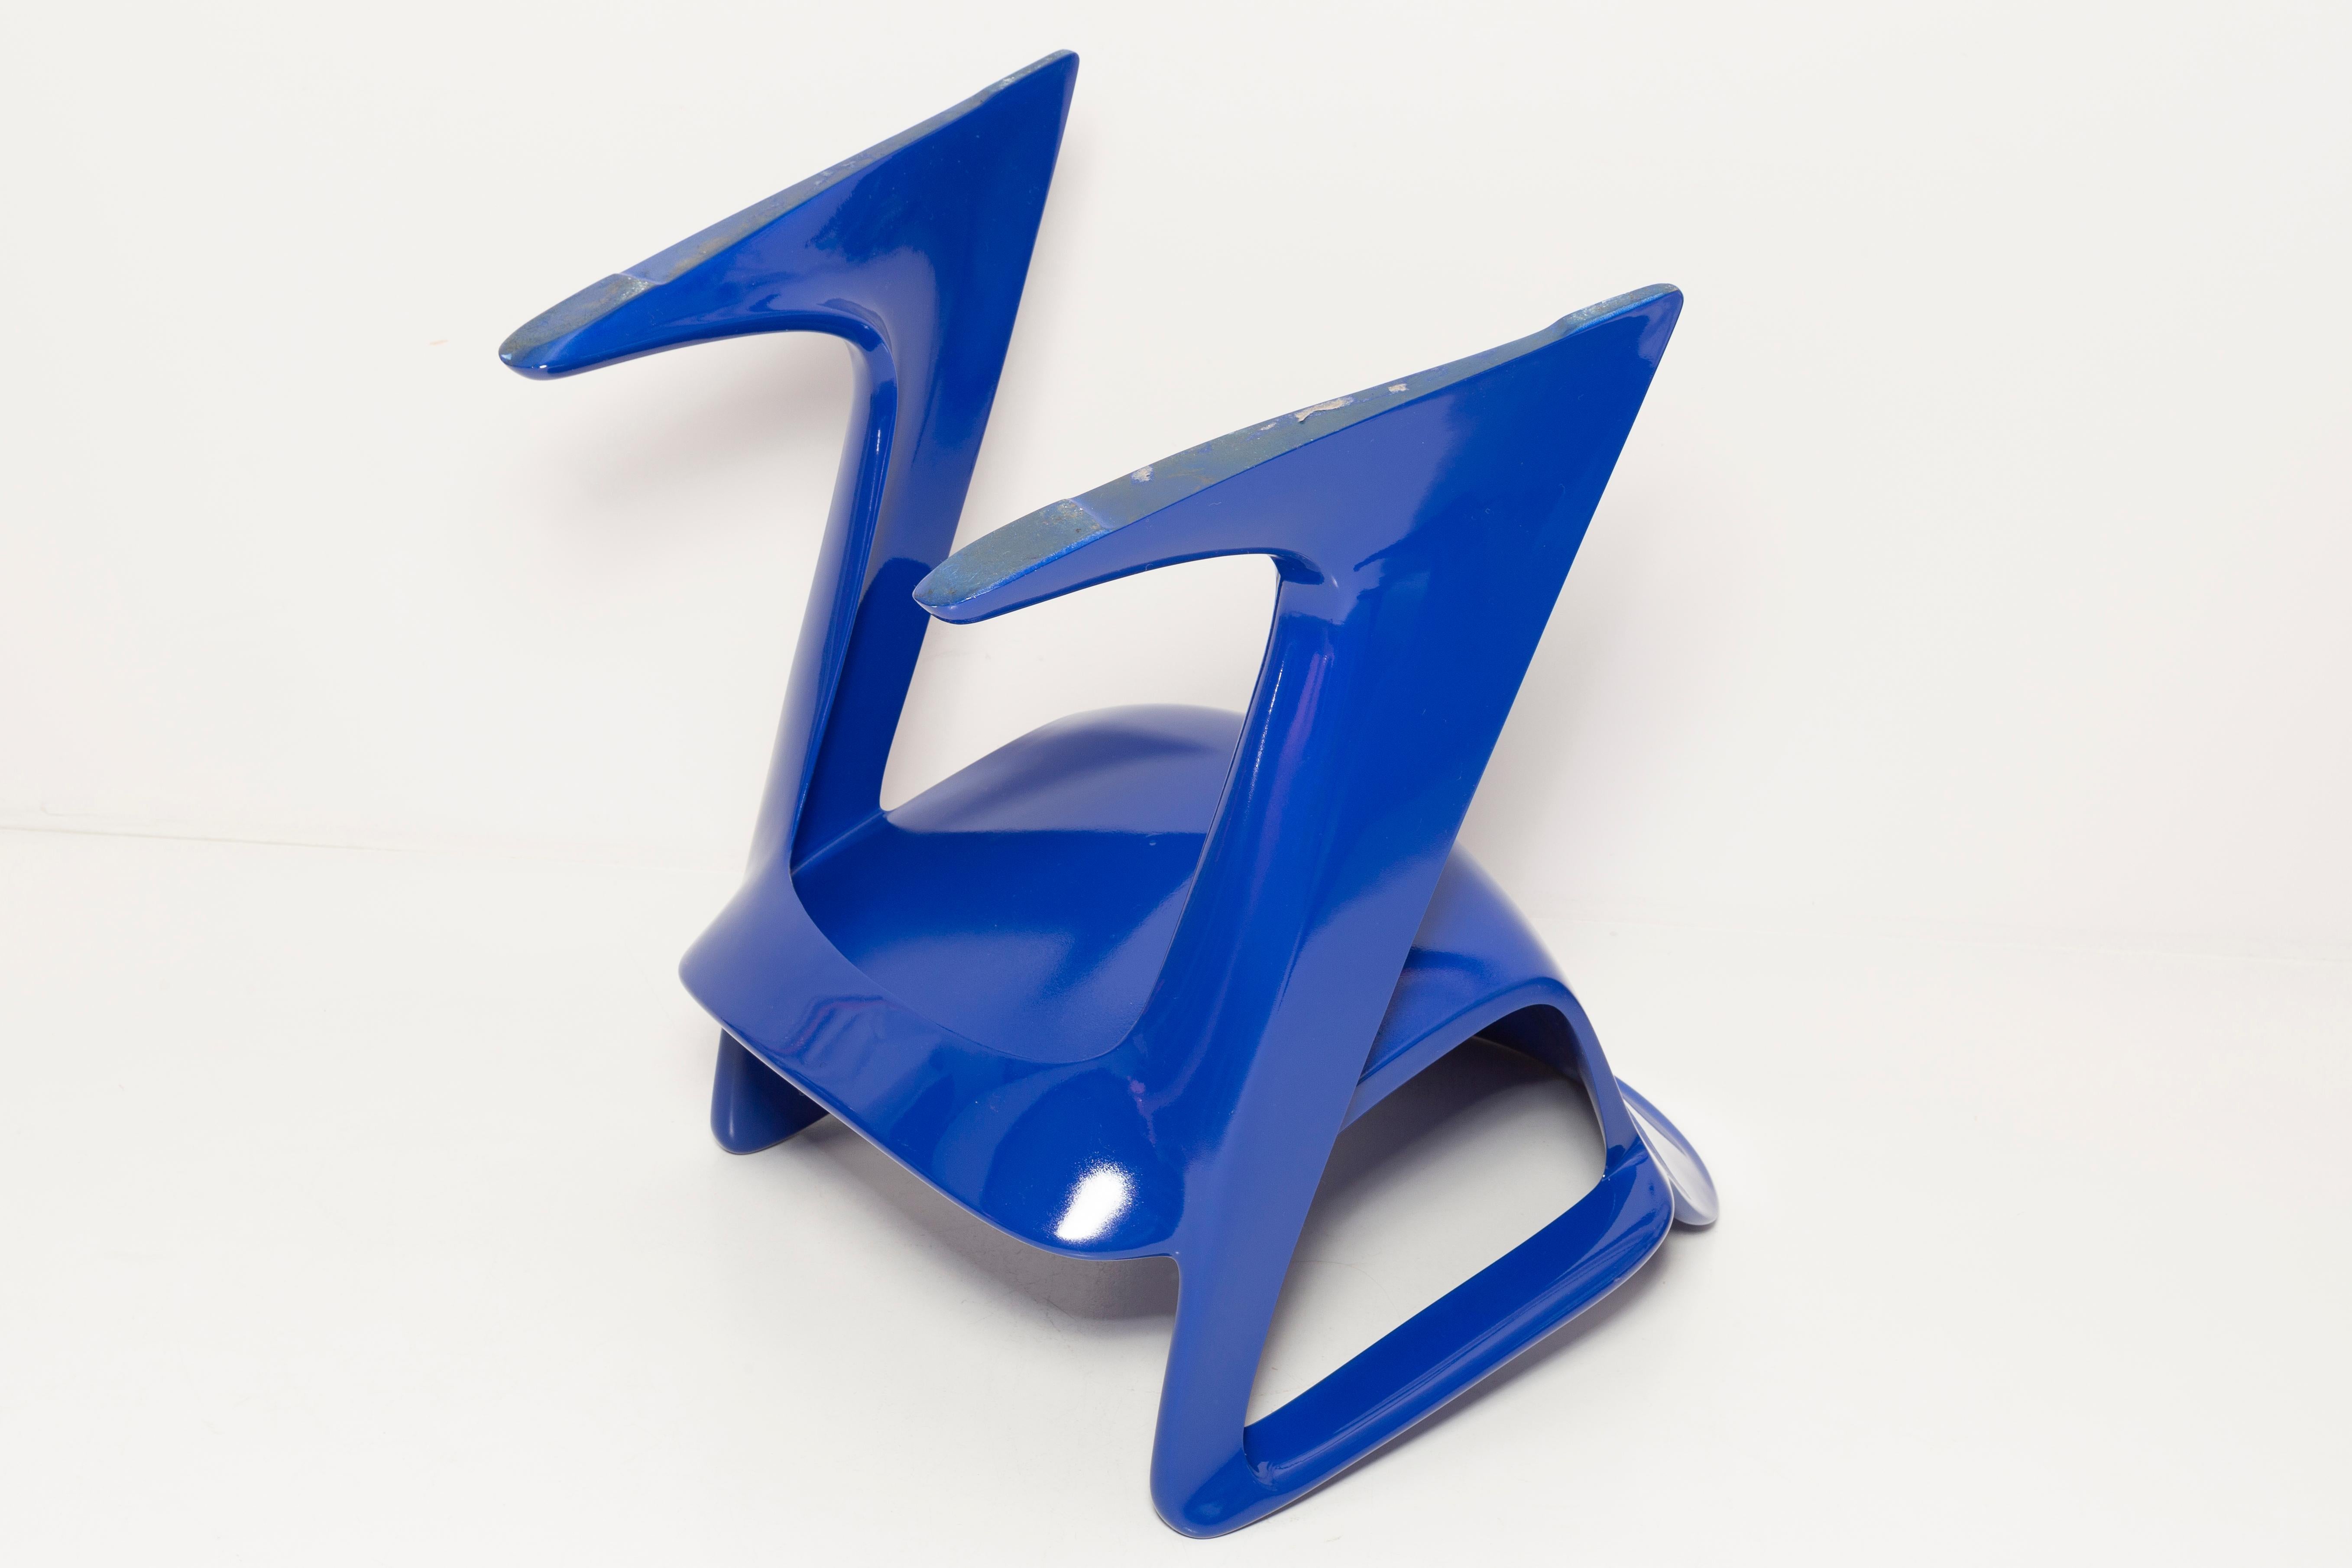 Ultramarine Blue Kangaroo Chair Designed by Ernst Moeckl, Germany, 1968 For Sale 2